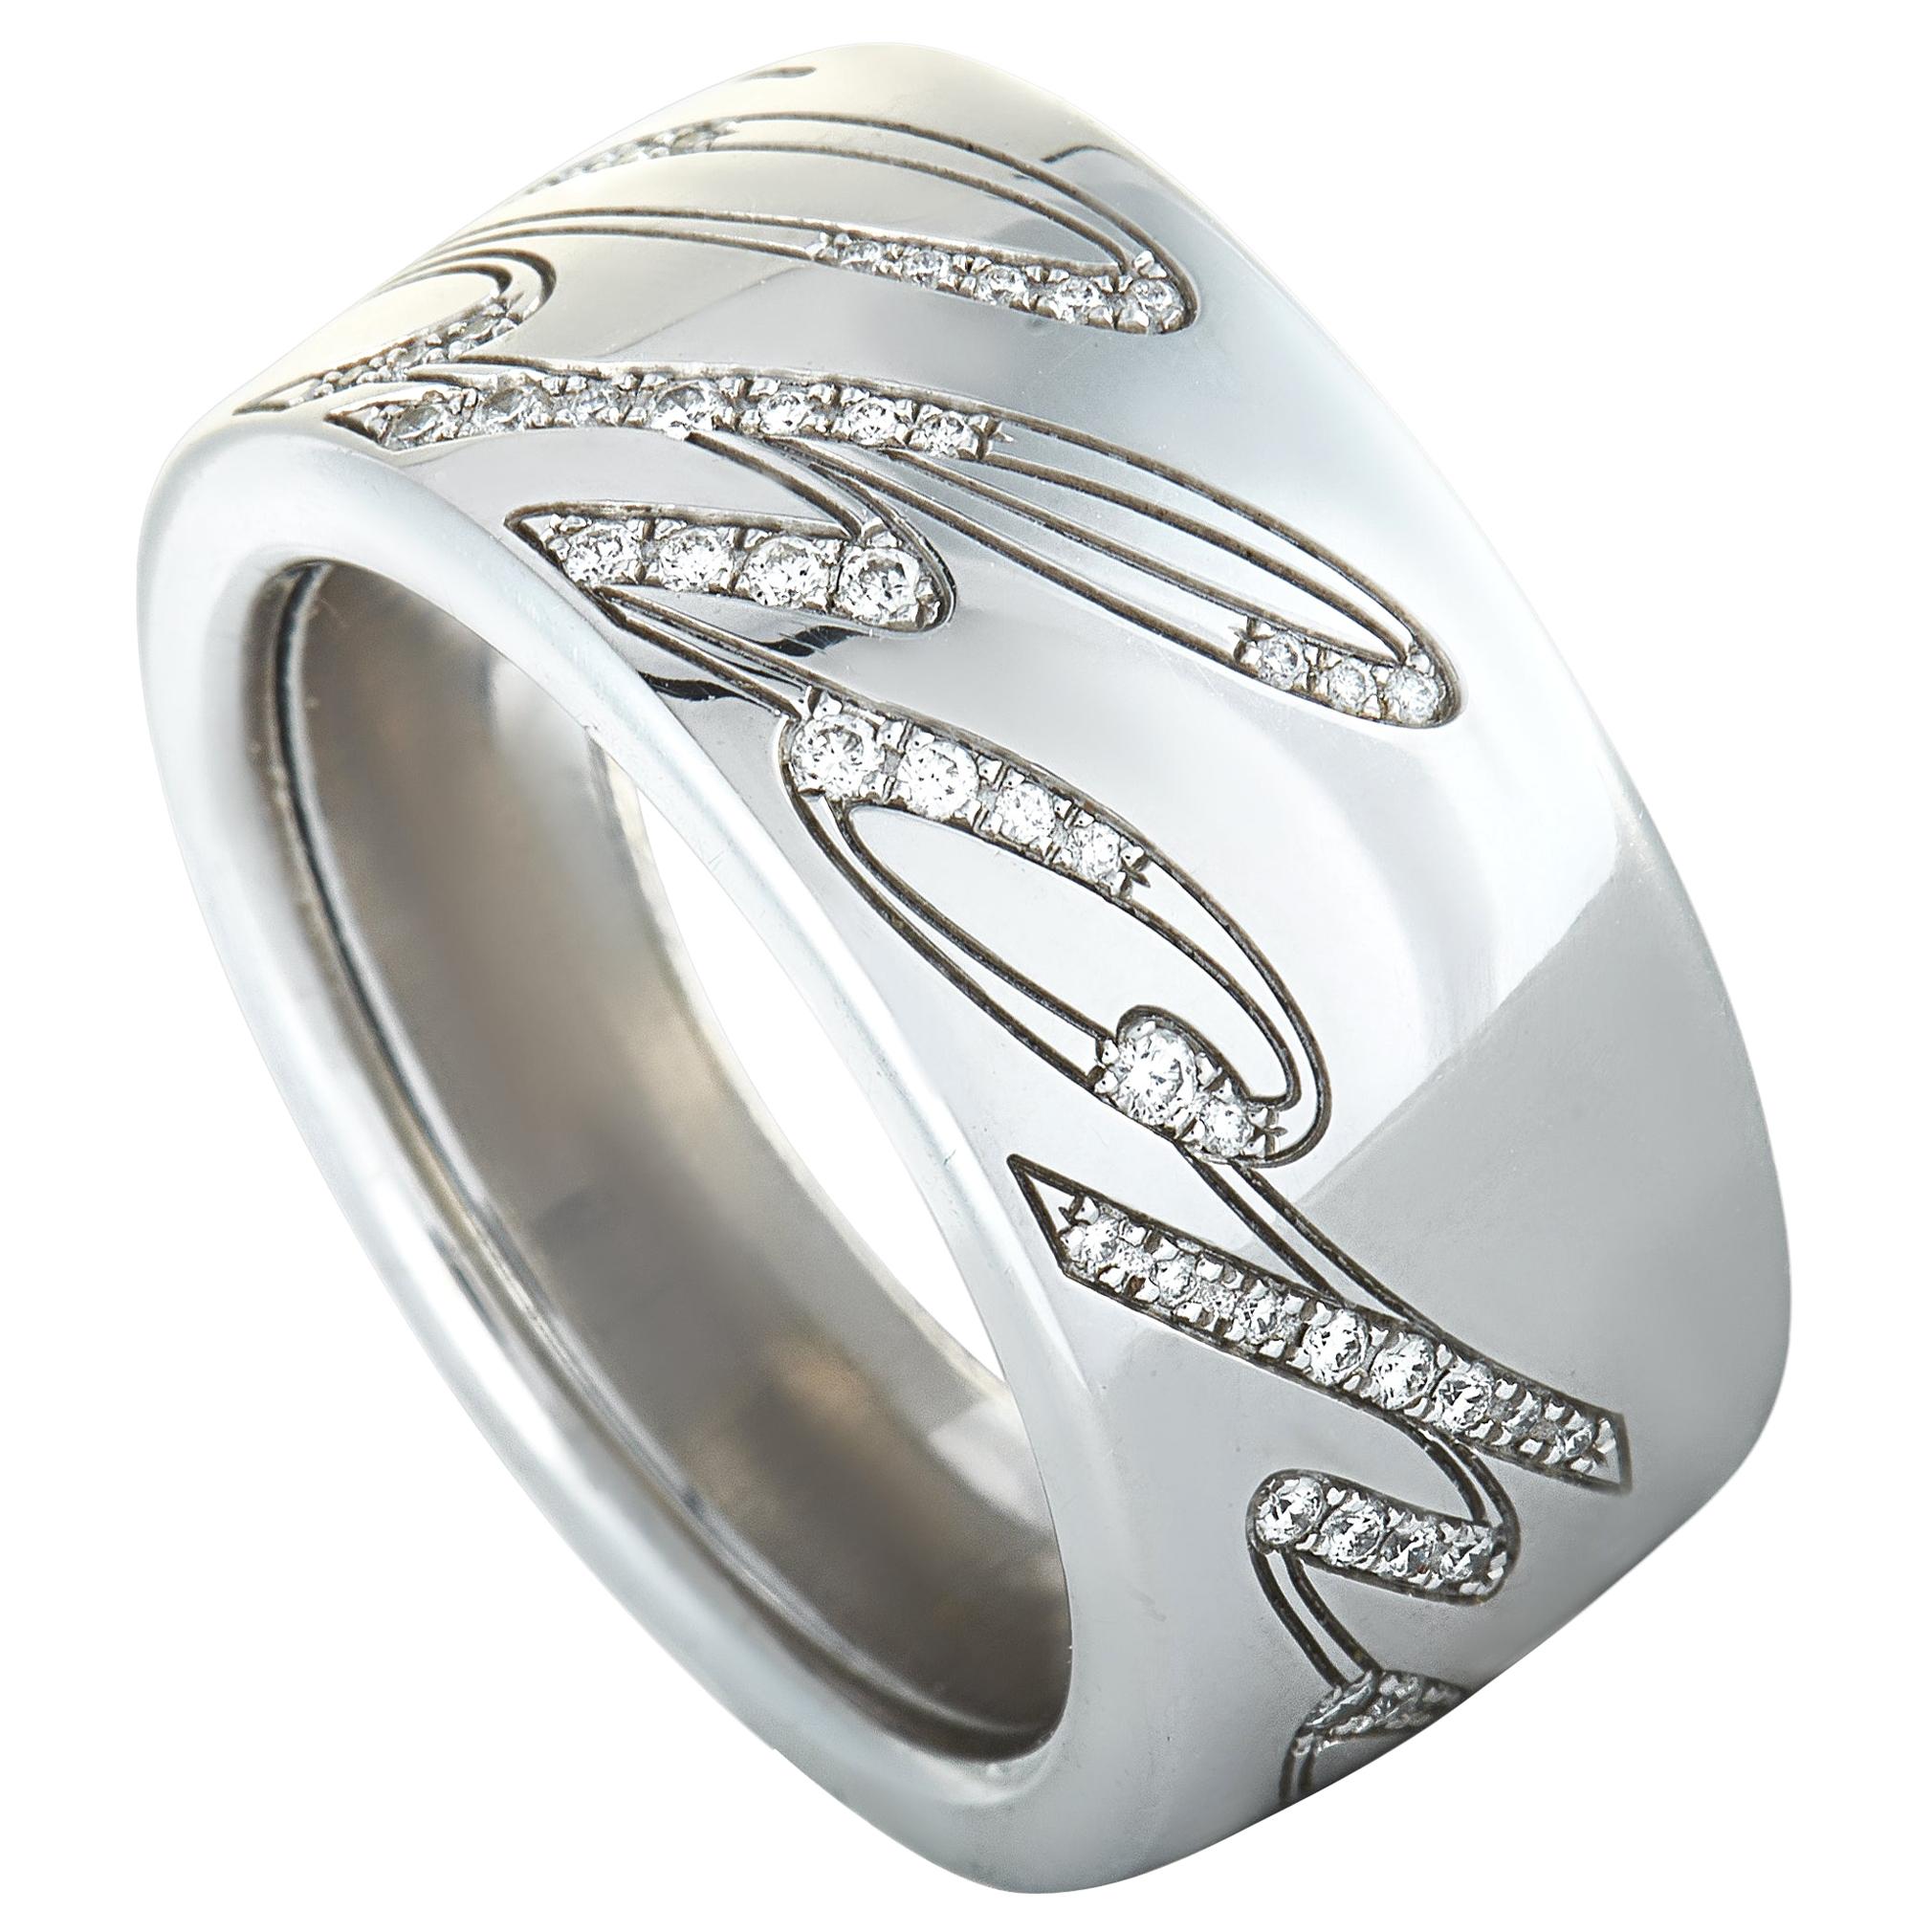 Chopard Chopardissimo Diamond White Gold Signature Band Ring